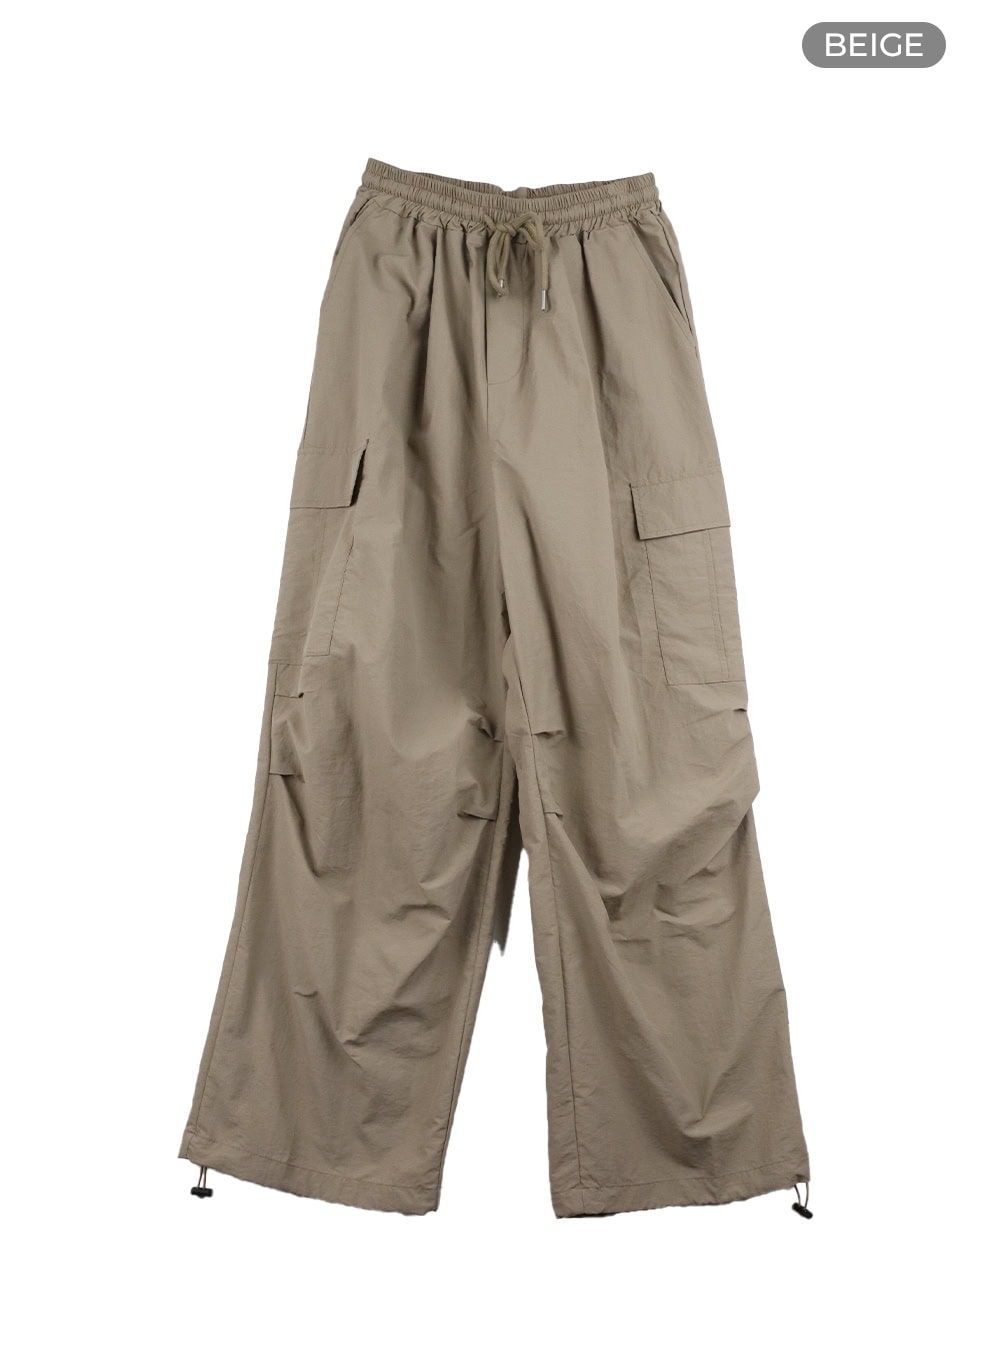 mens-wide-fit-parachute-pants-iy402 / Beige